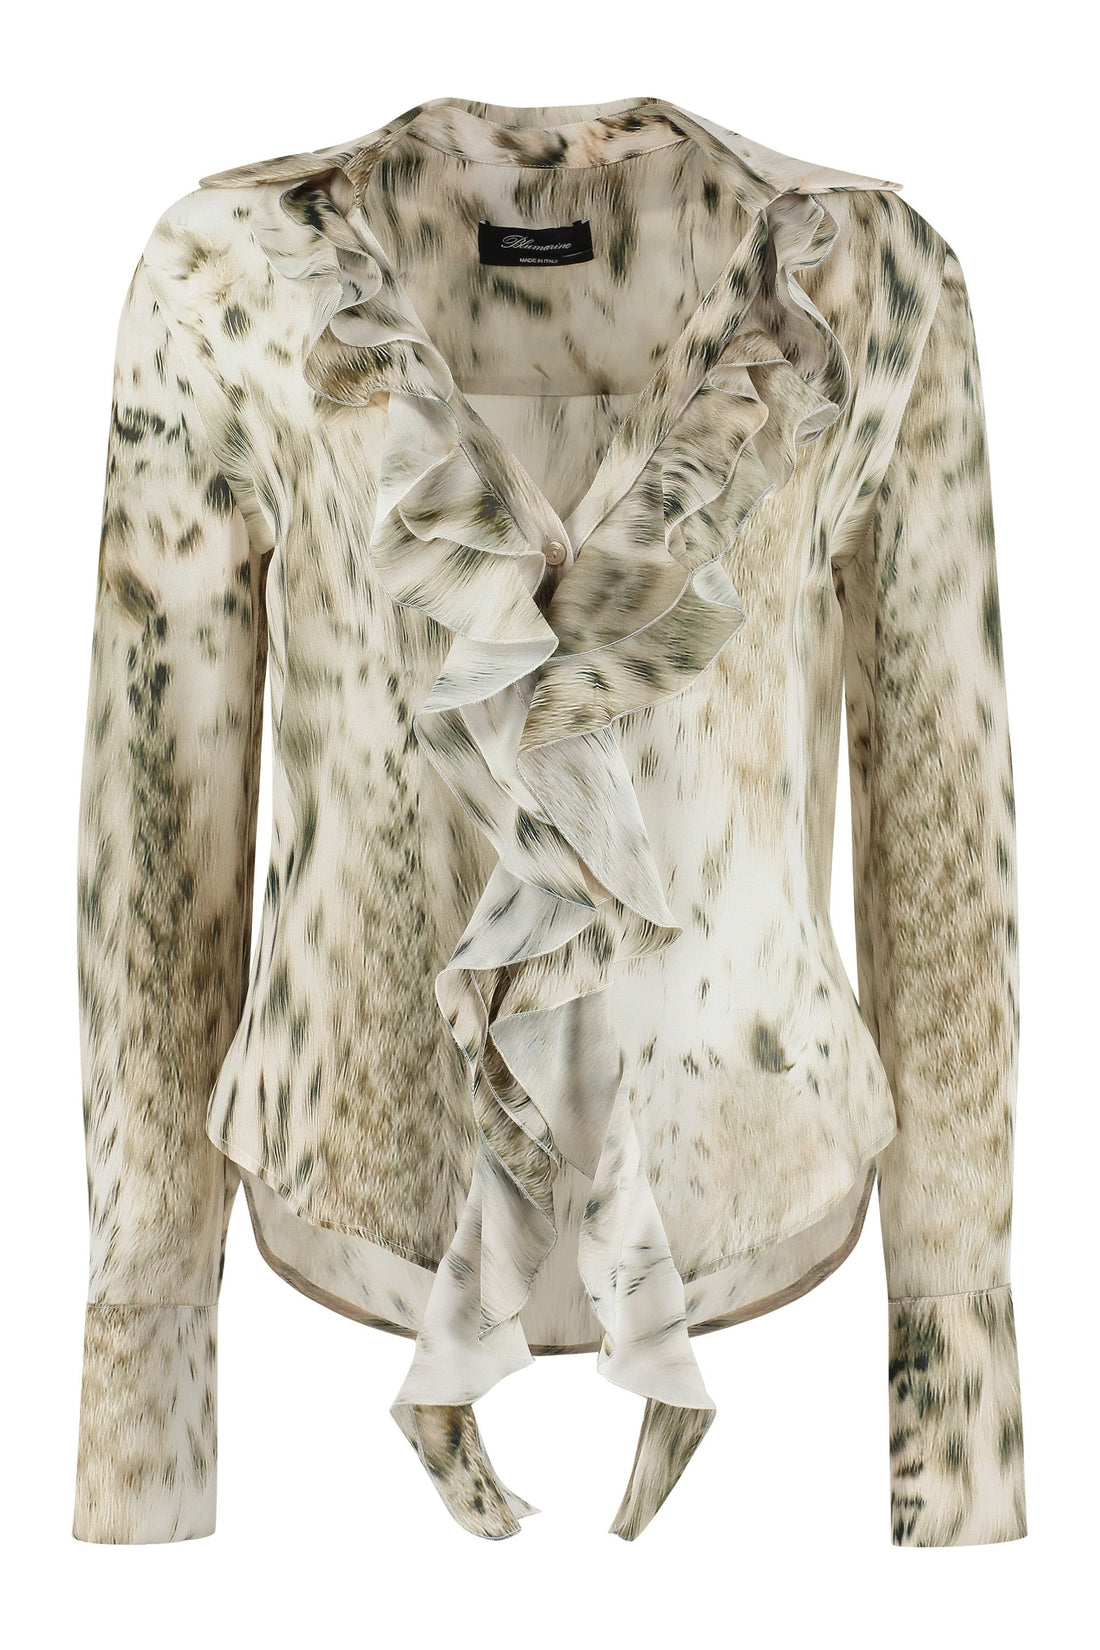 Blumarine-OUTLET-SALE-Printed georgette blouse-ARCHIVIST